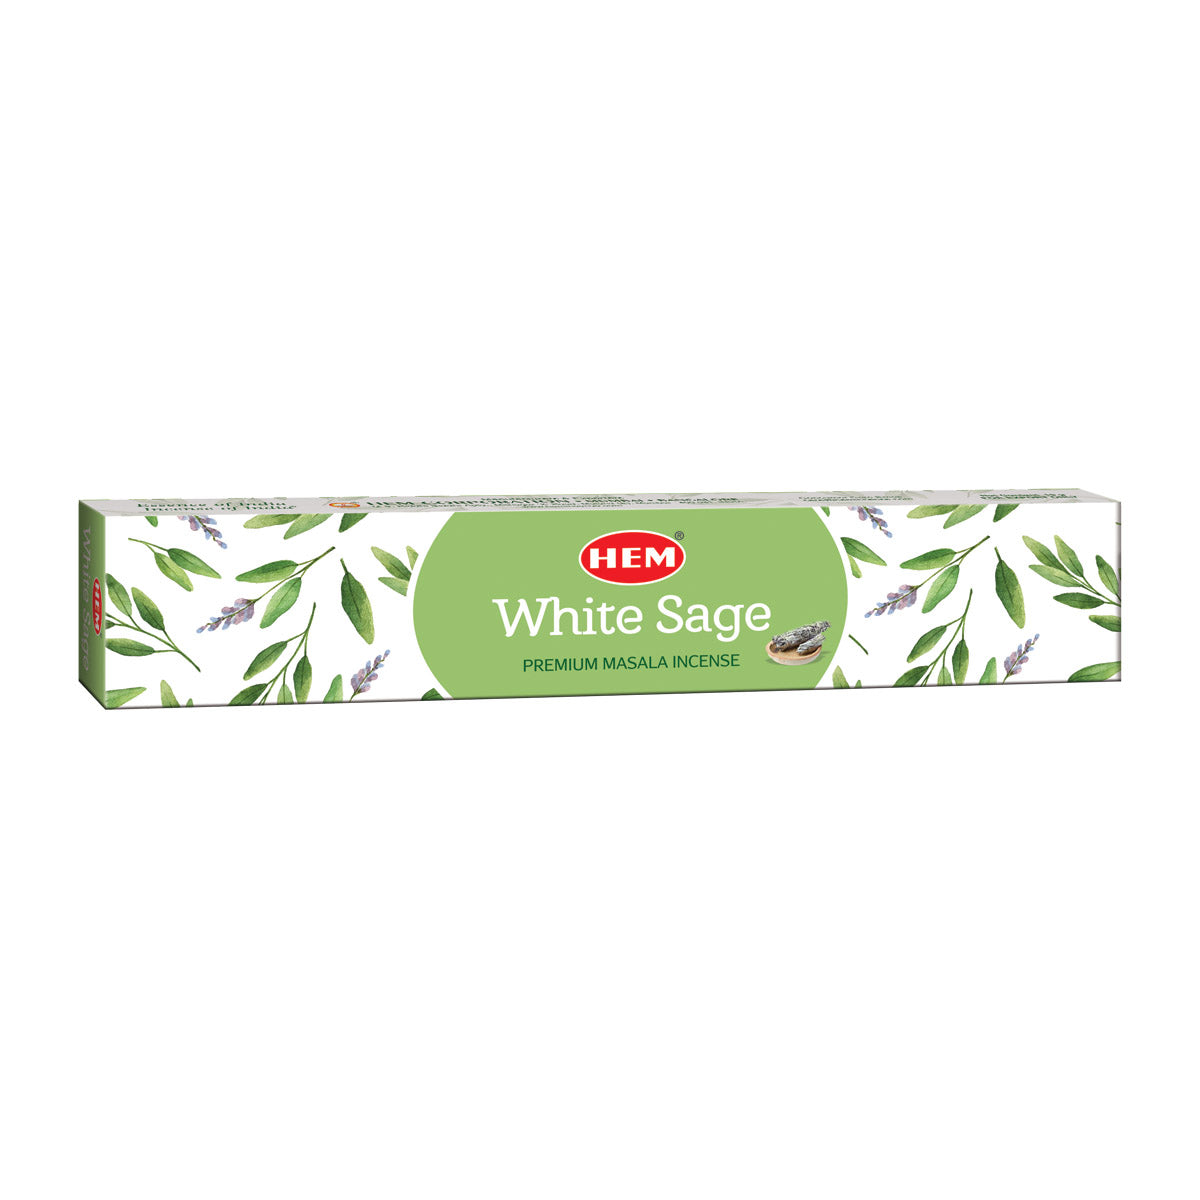 HEM White Sage Premium Masala Incense Sticks (12 Packets 15g Each)